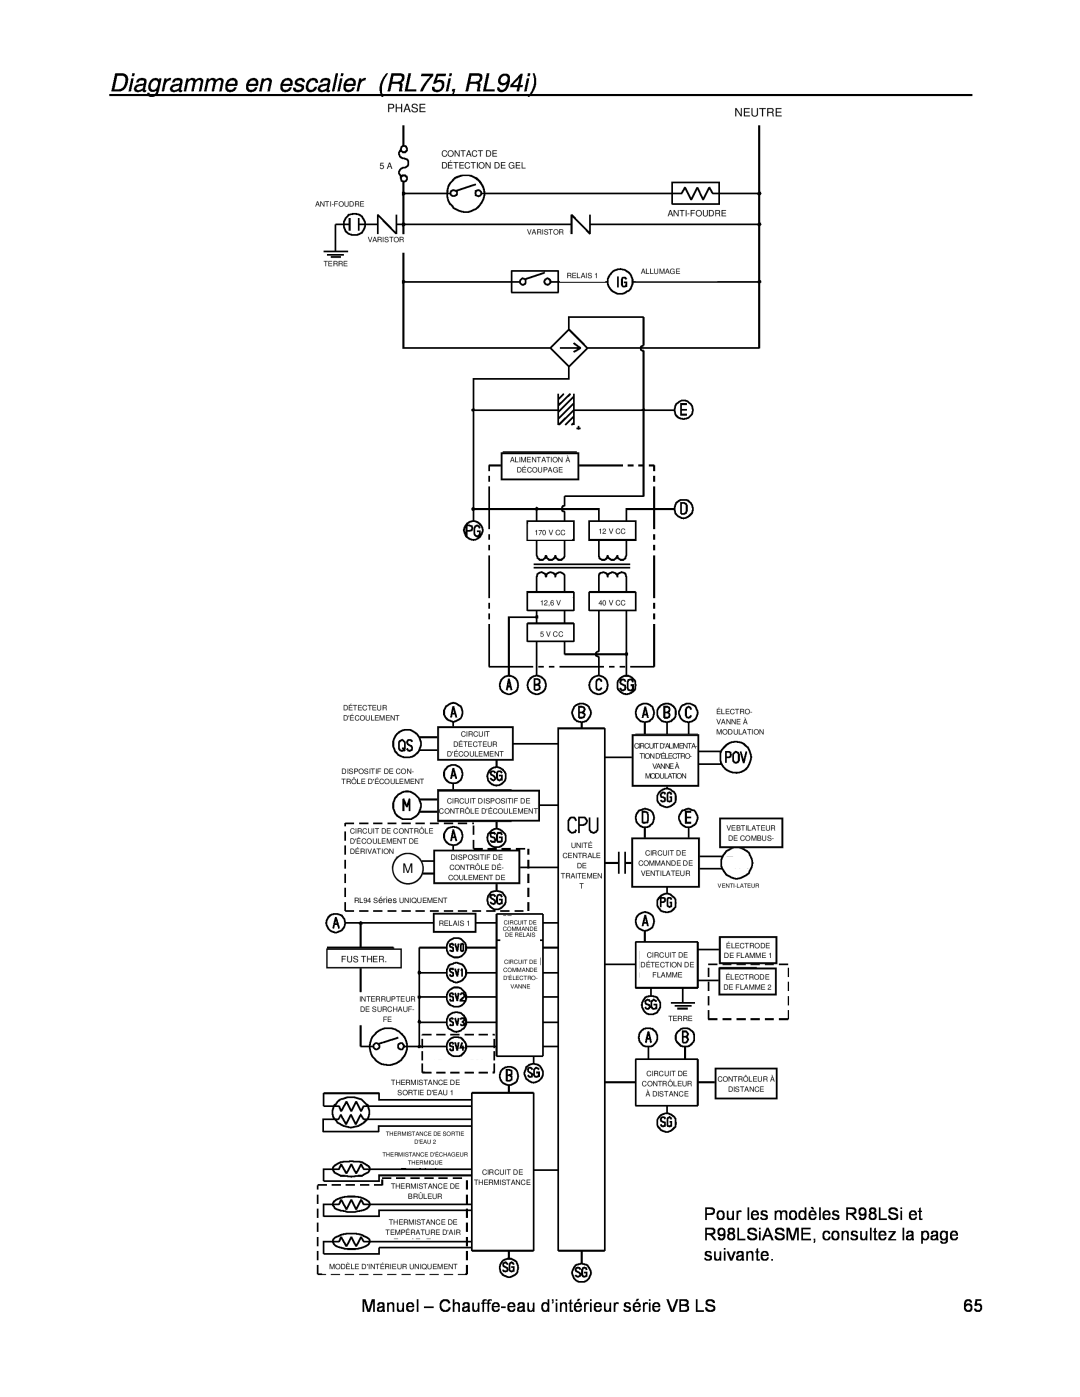 Rinnai RL75I, RL94I Diagramme en escalier RL75i, RL94i, Contact De, Détection De Gel, Anti-Foudre, Fus Ther 